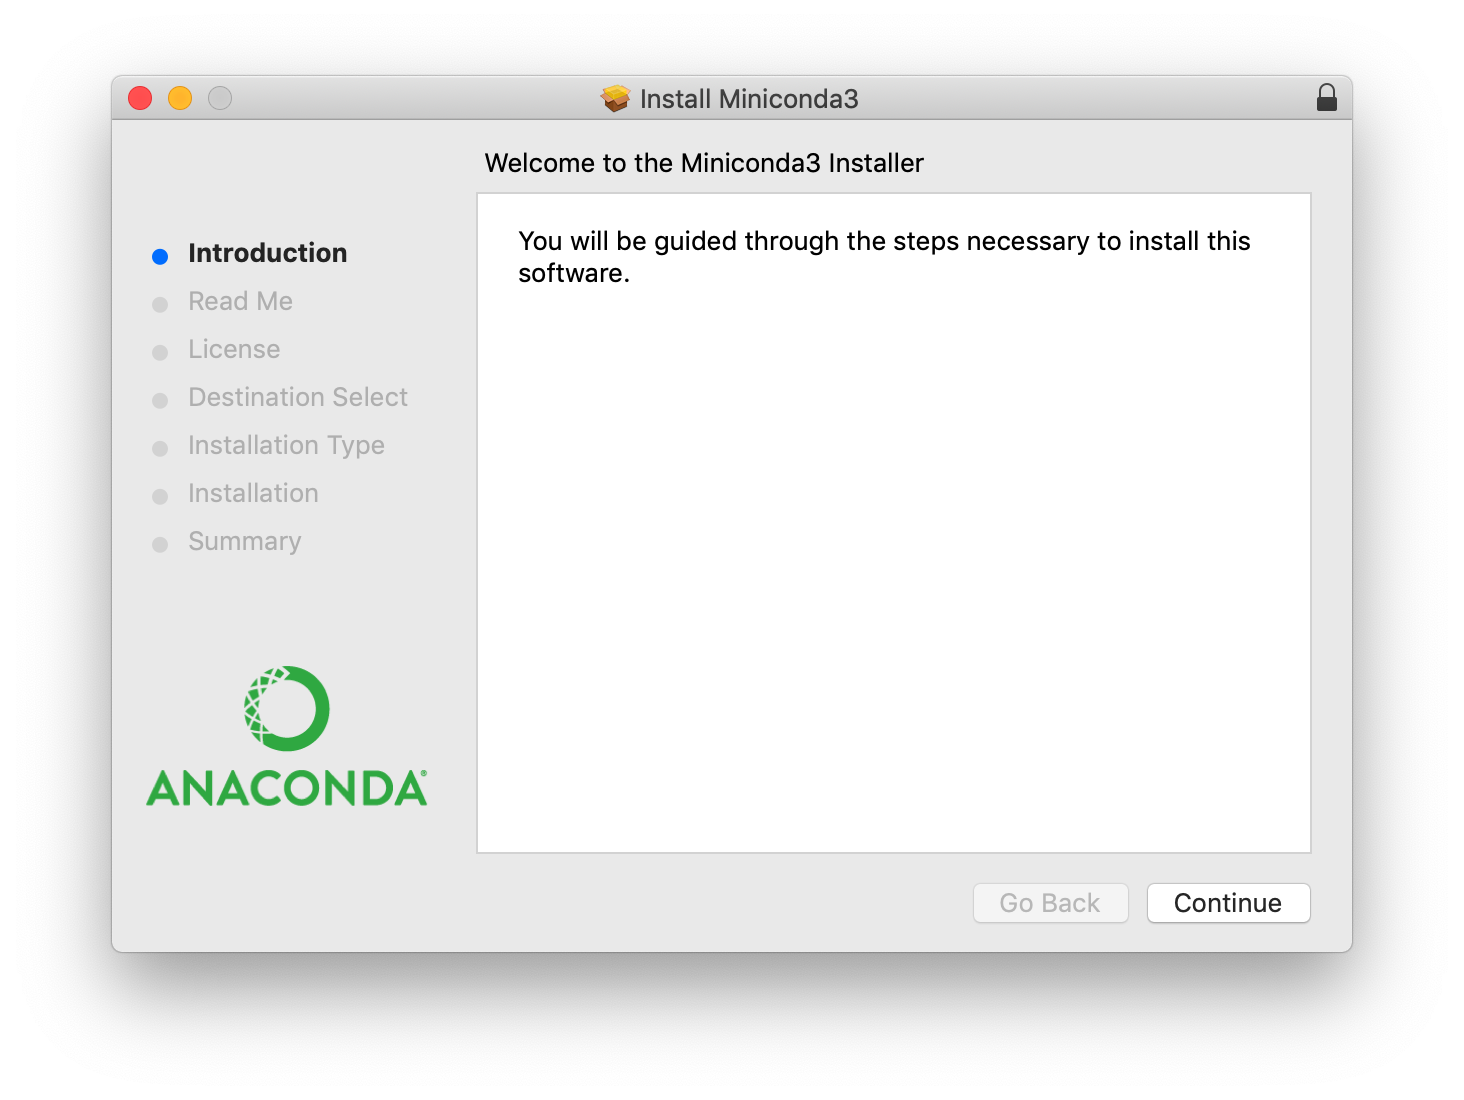 Anaconda install page